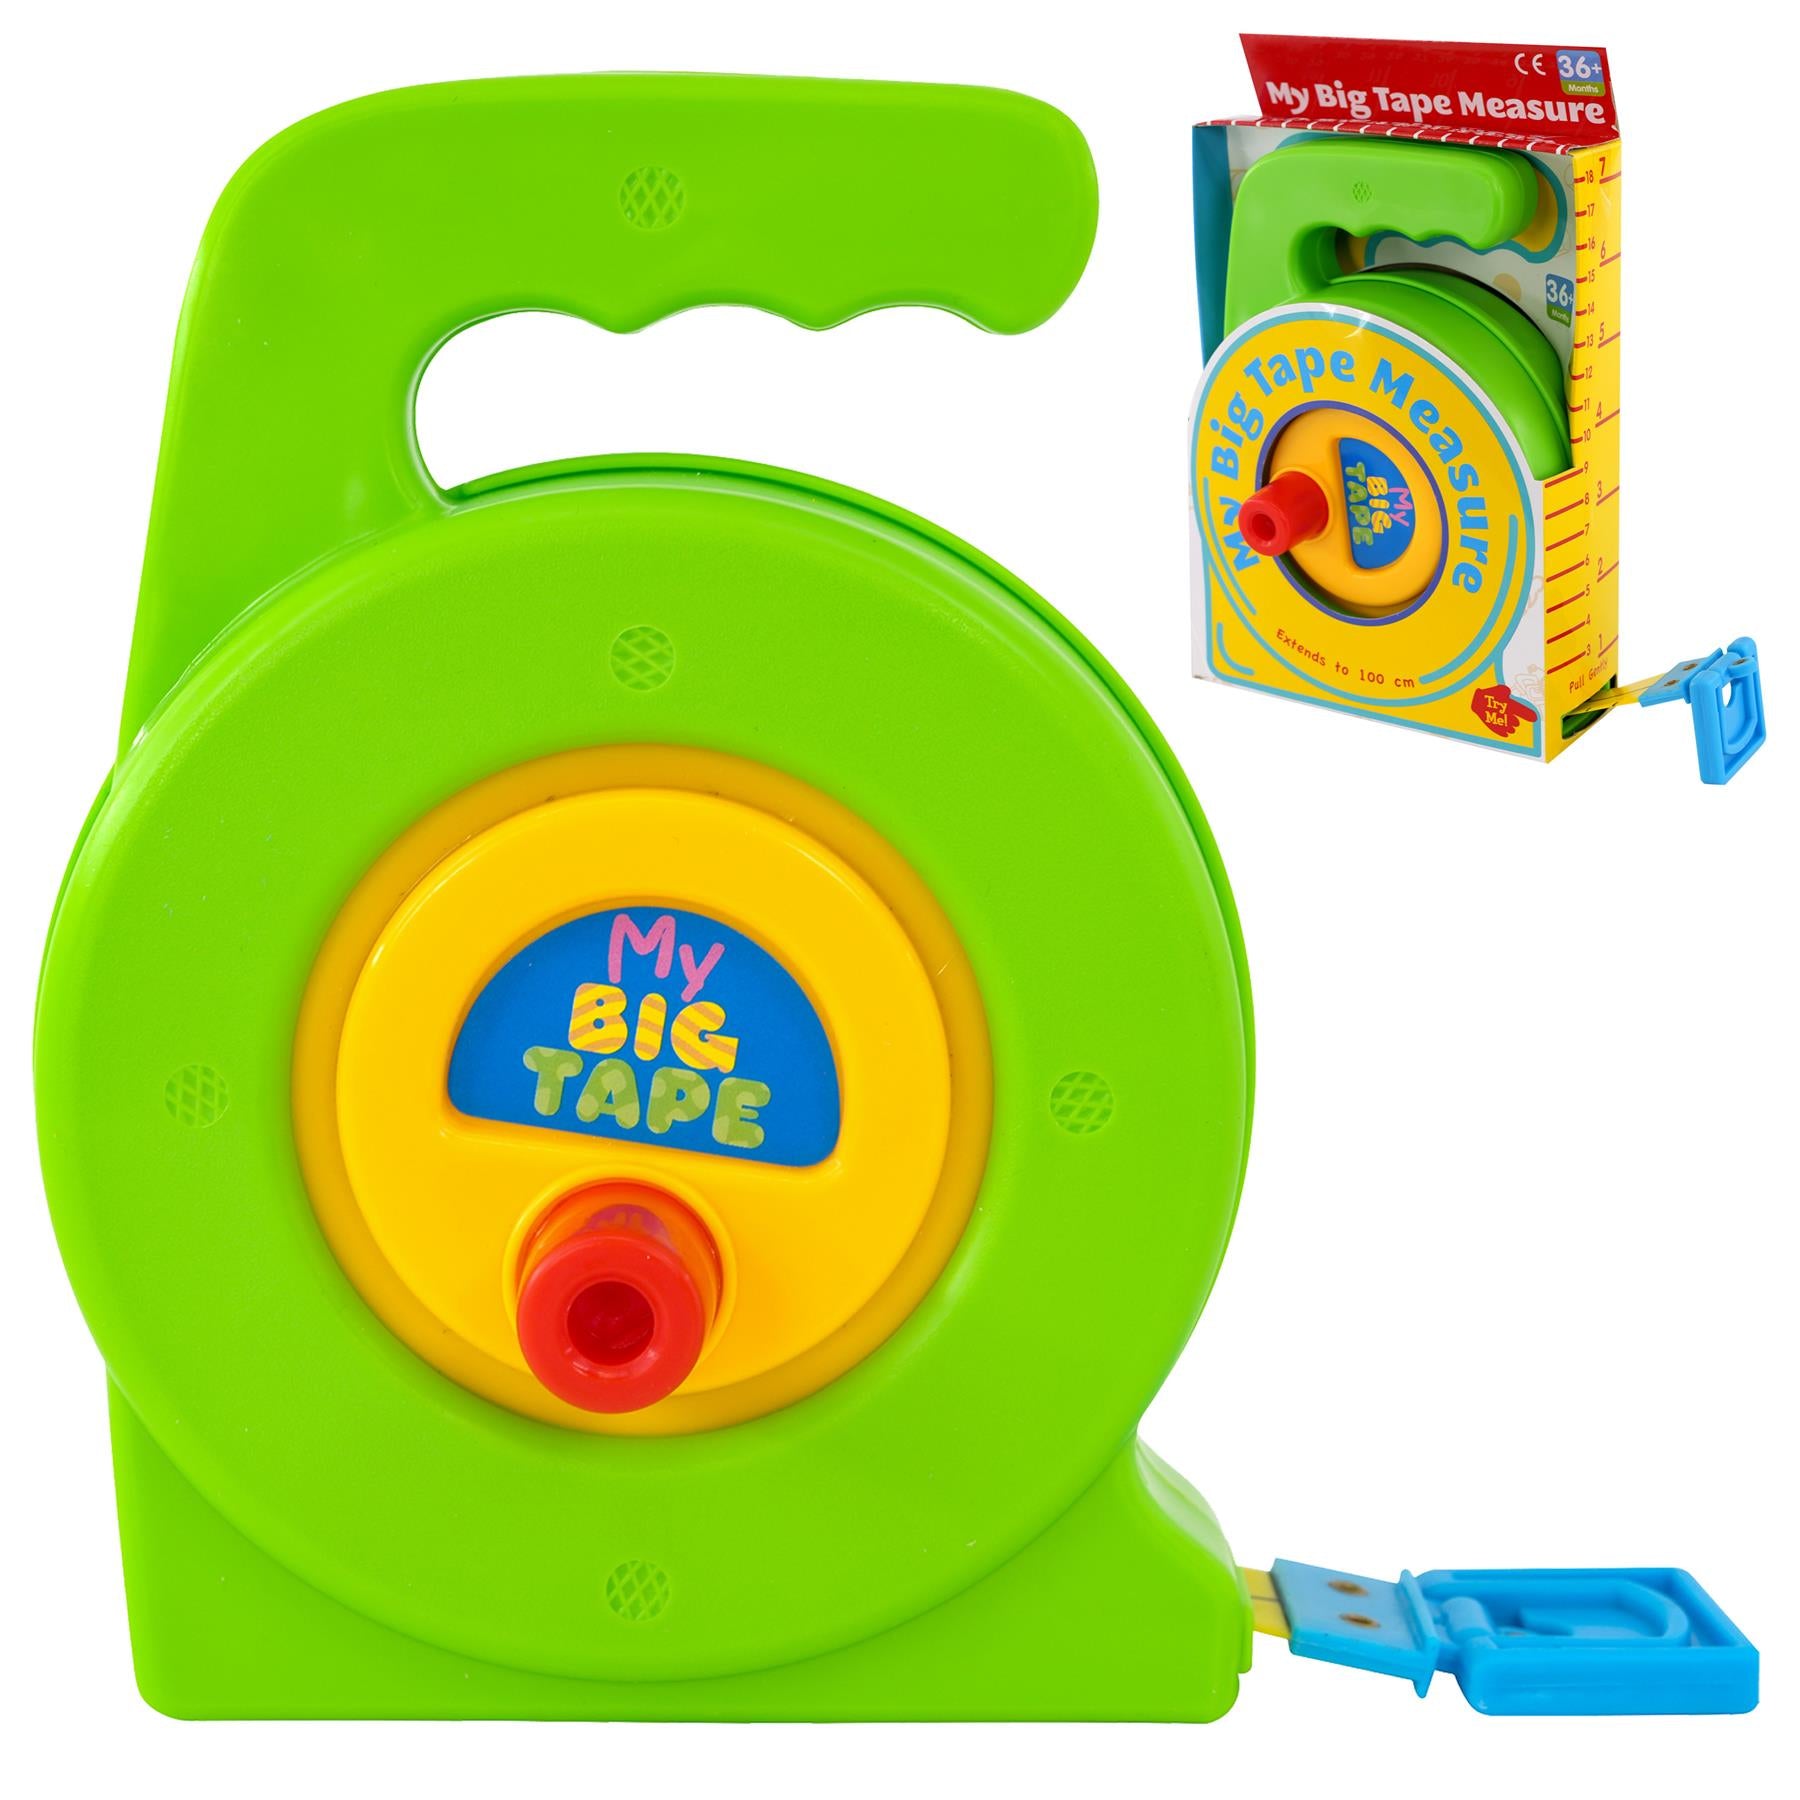 Tape Measure Toy - Green - Tape Measure Toy - Kids Tape Measure